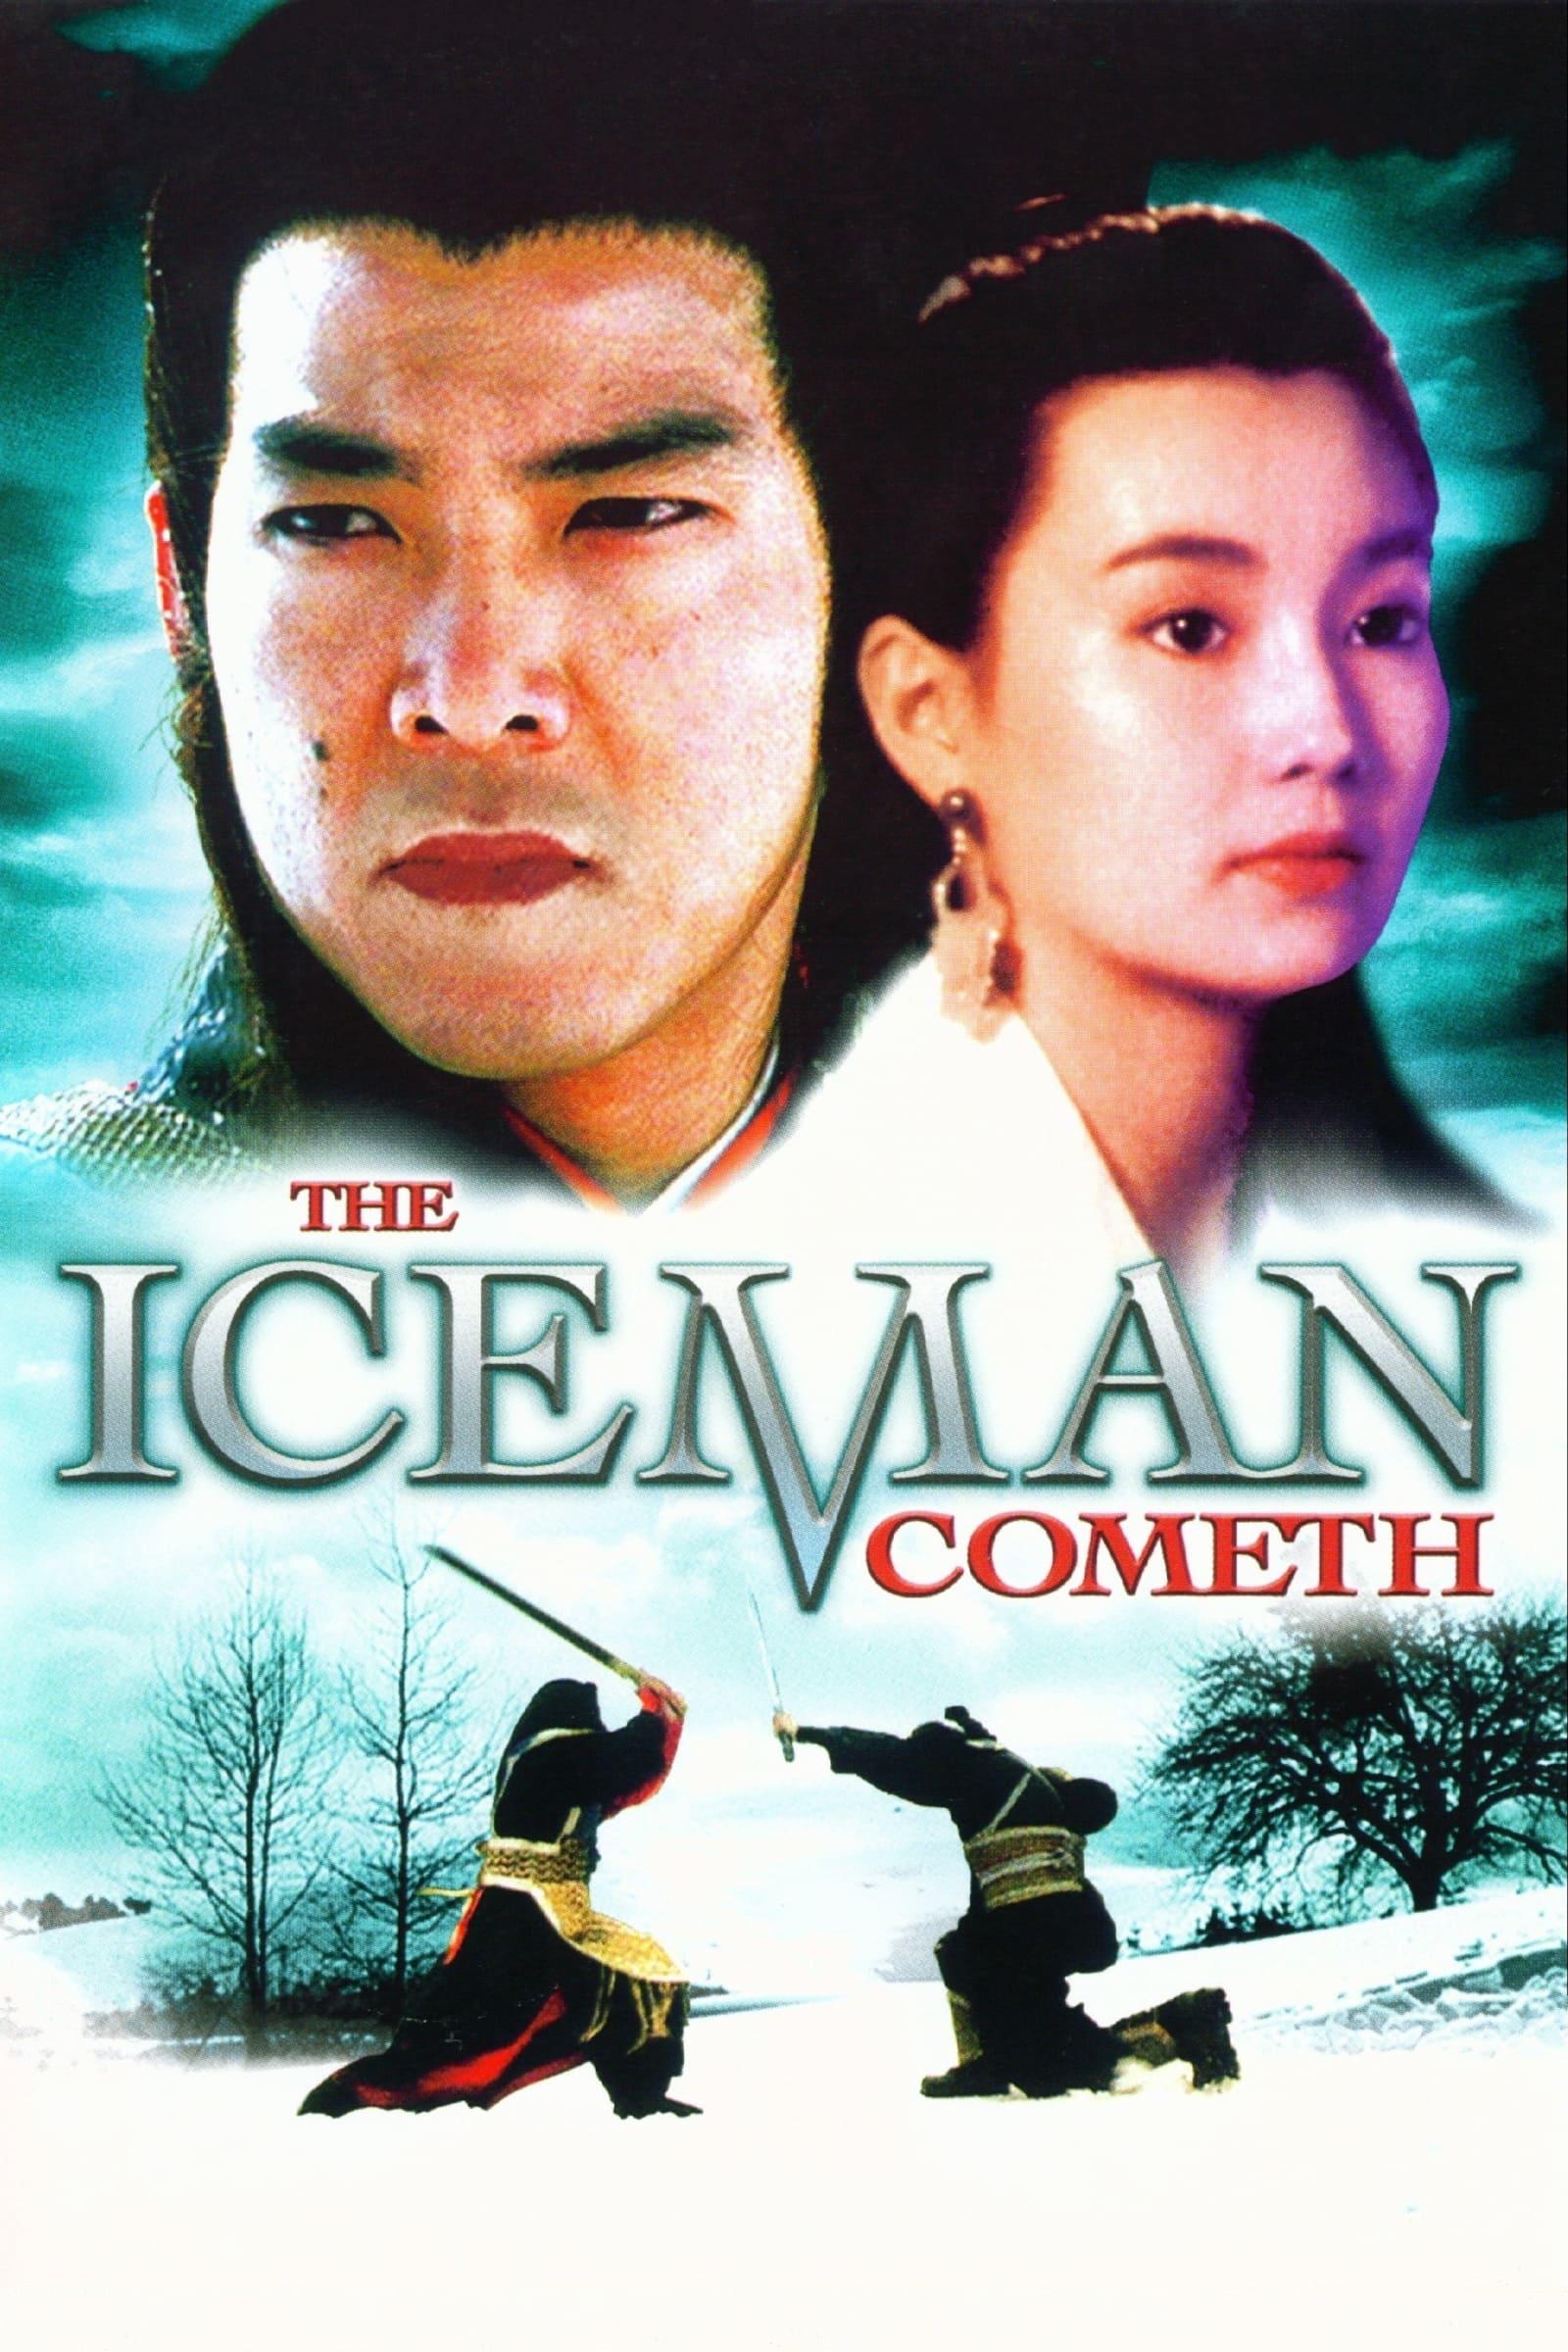 The Iceman Cometh poster